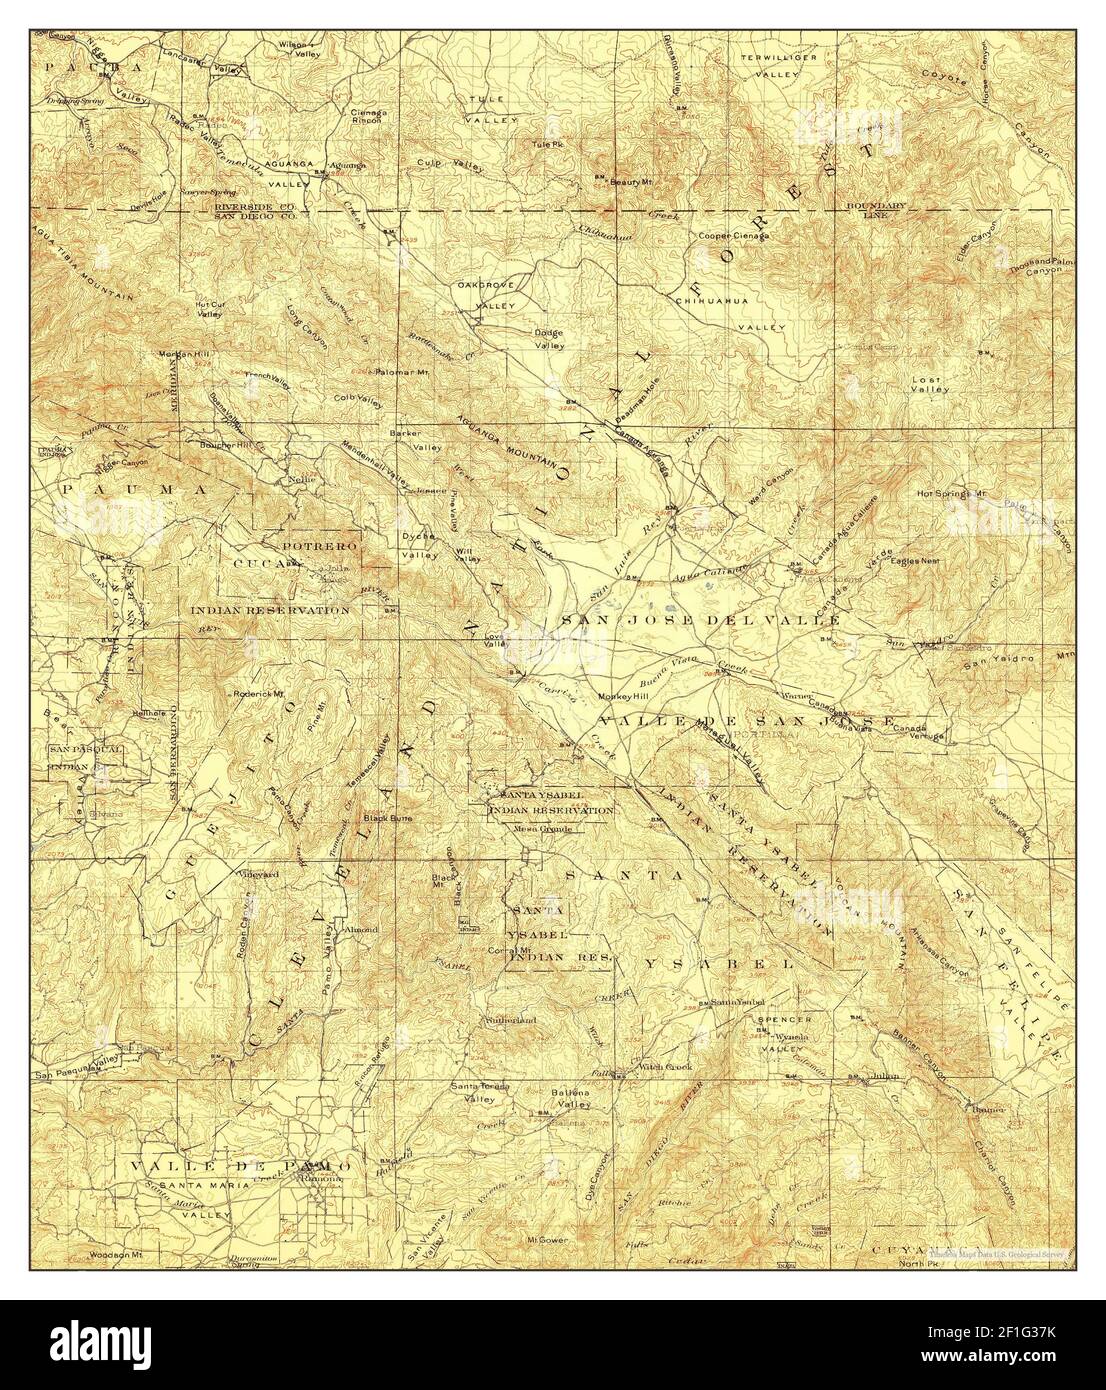 Ramona, California, map 1903, 1:125000, United States of America by Timeless Maps, data U.S. Geological Survey Stock Photo